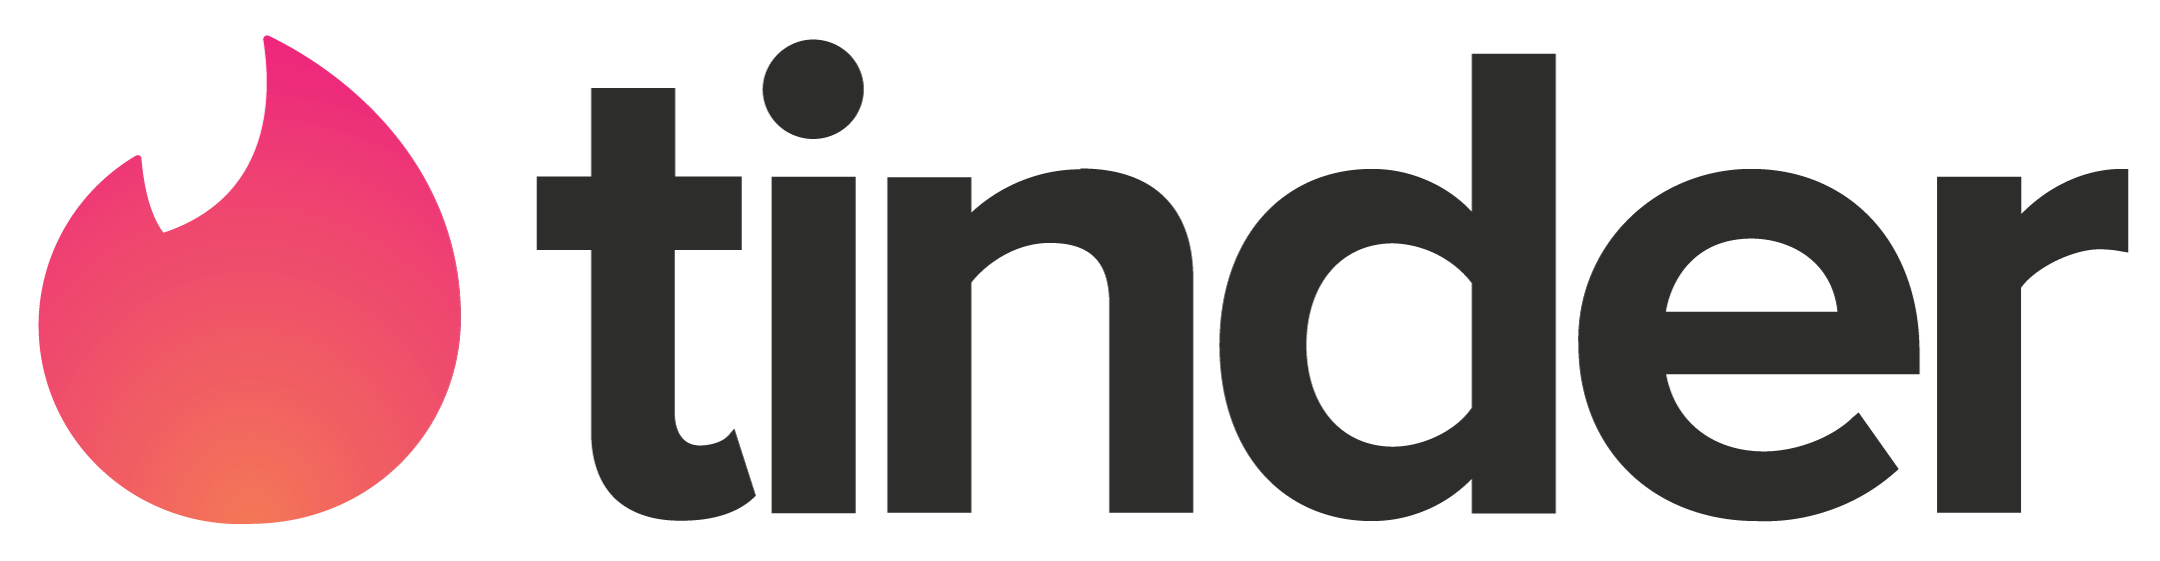 tinder logo 1 - Tinder Logo